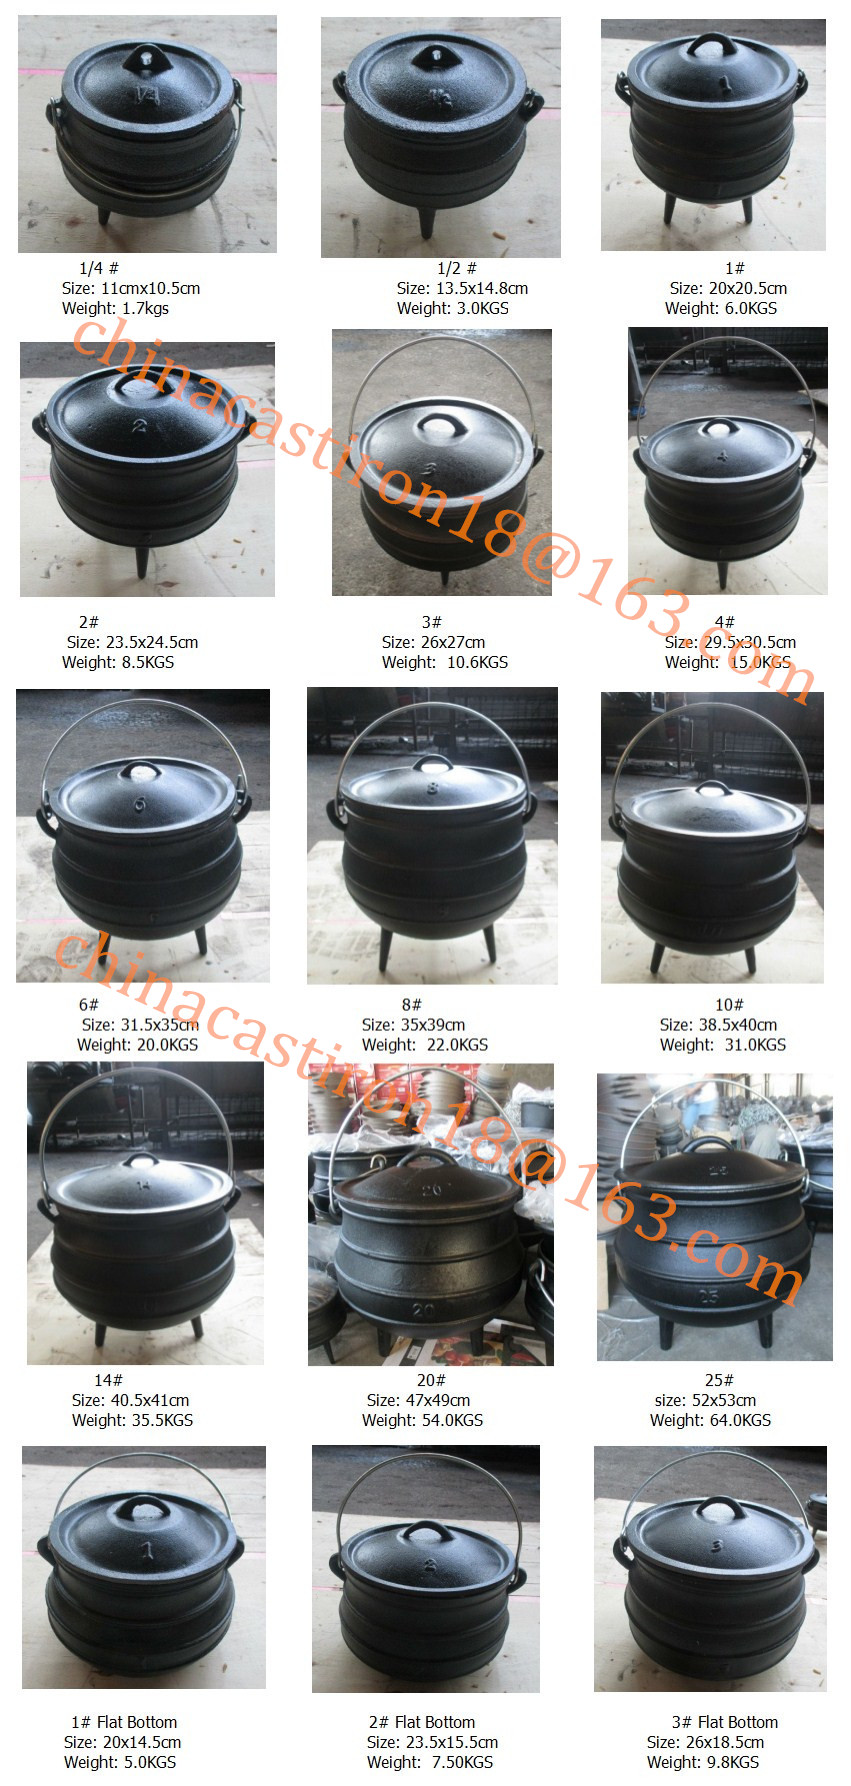 Potjie Cast Iron Flat Pot - 2 Quart Size 1/2